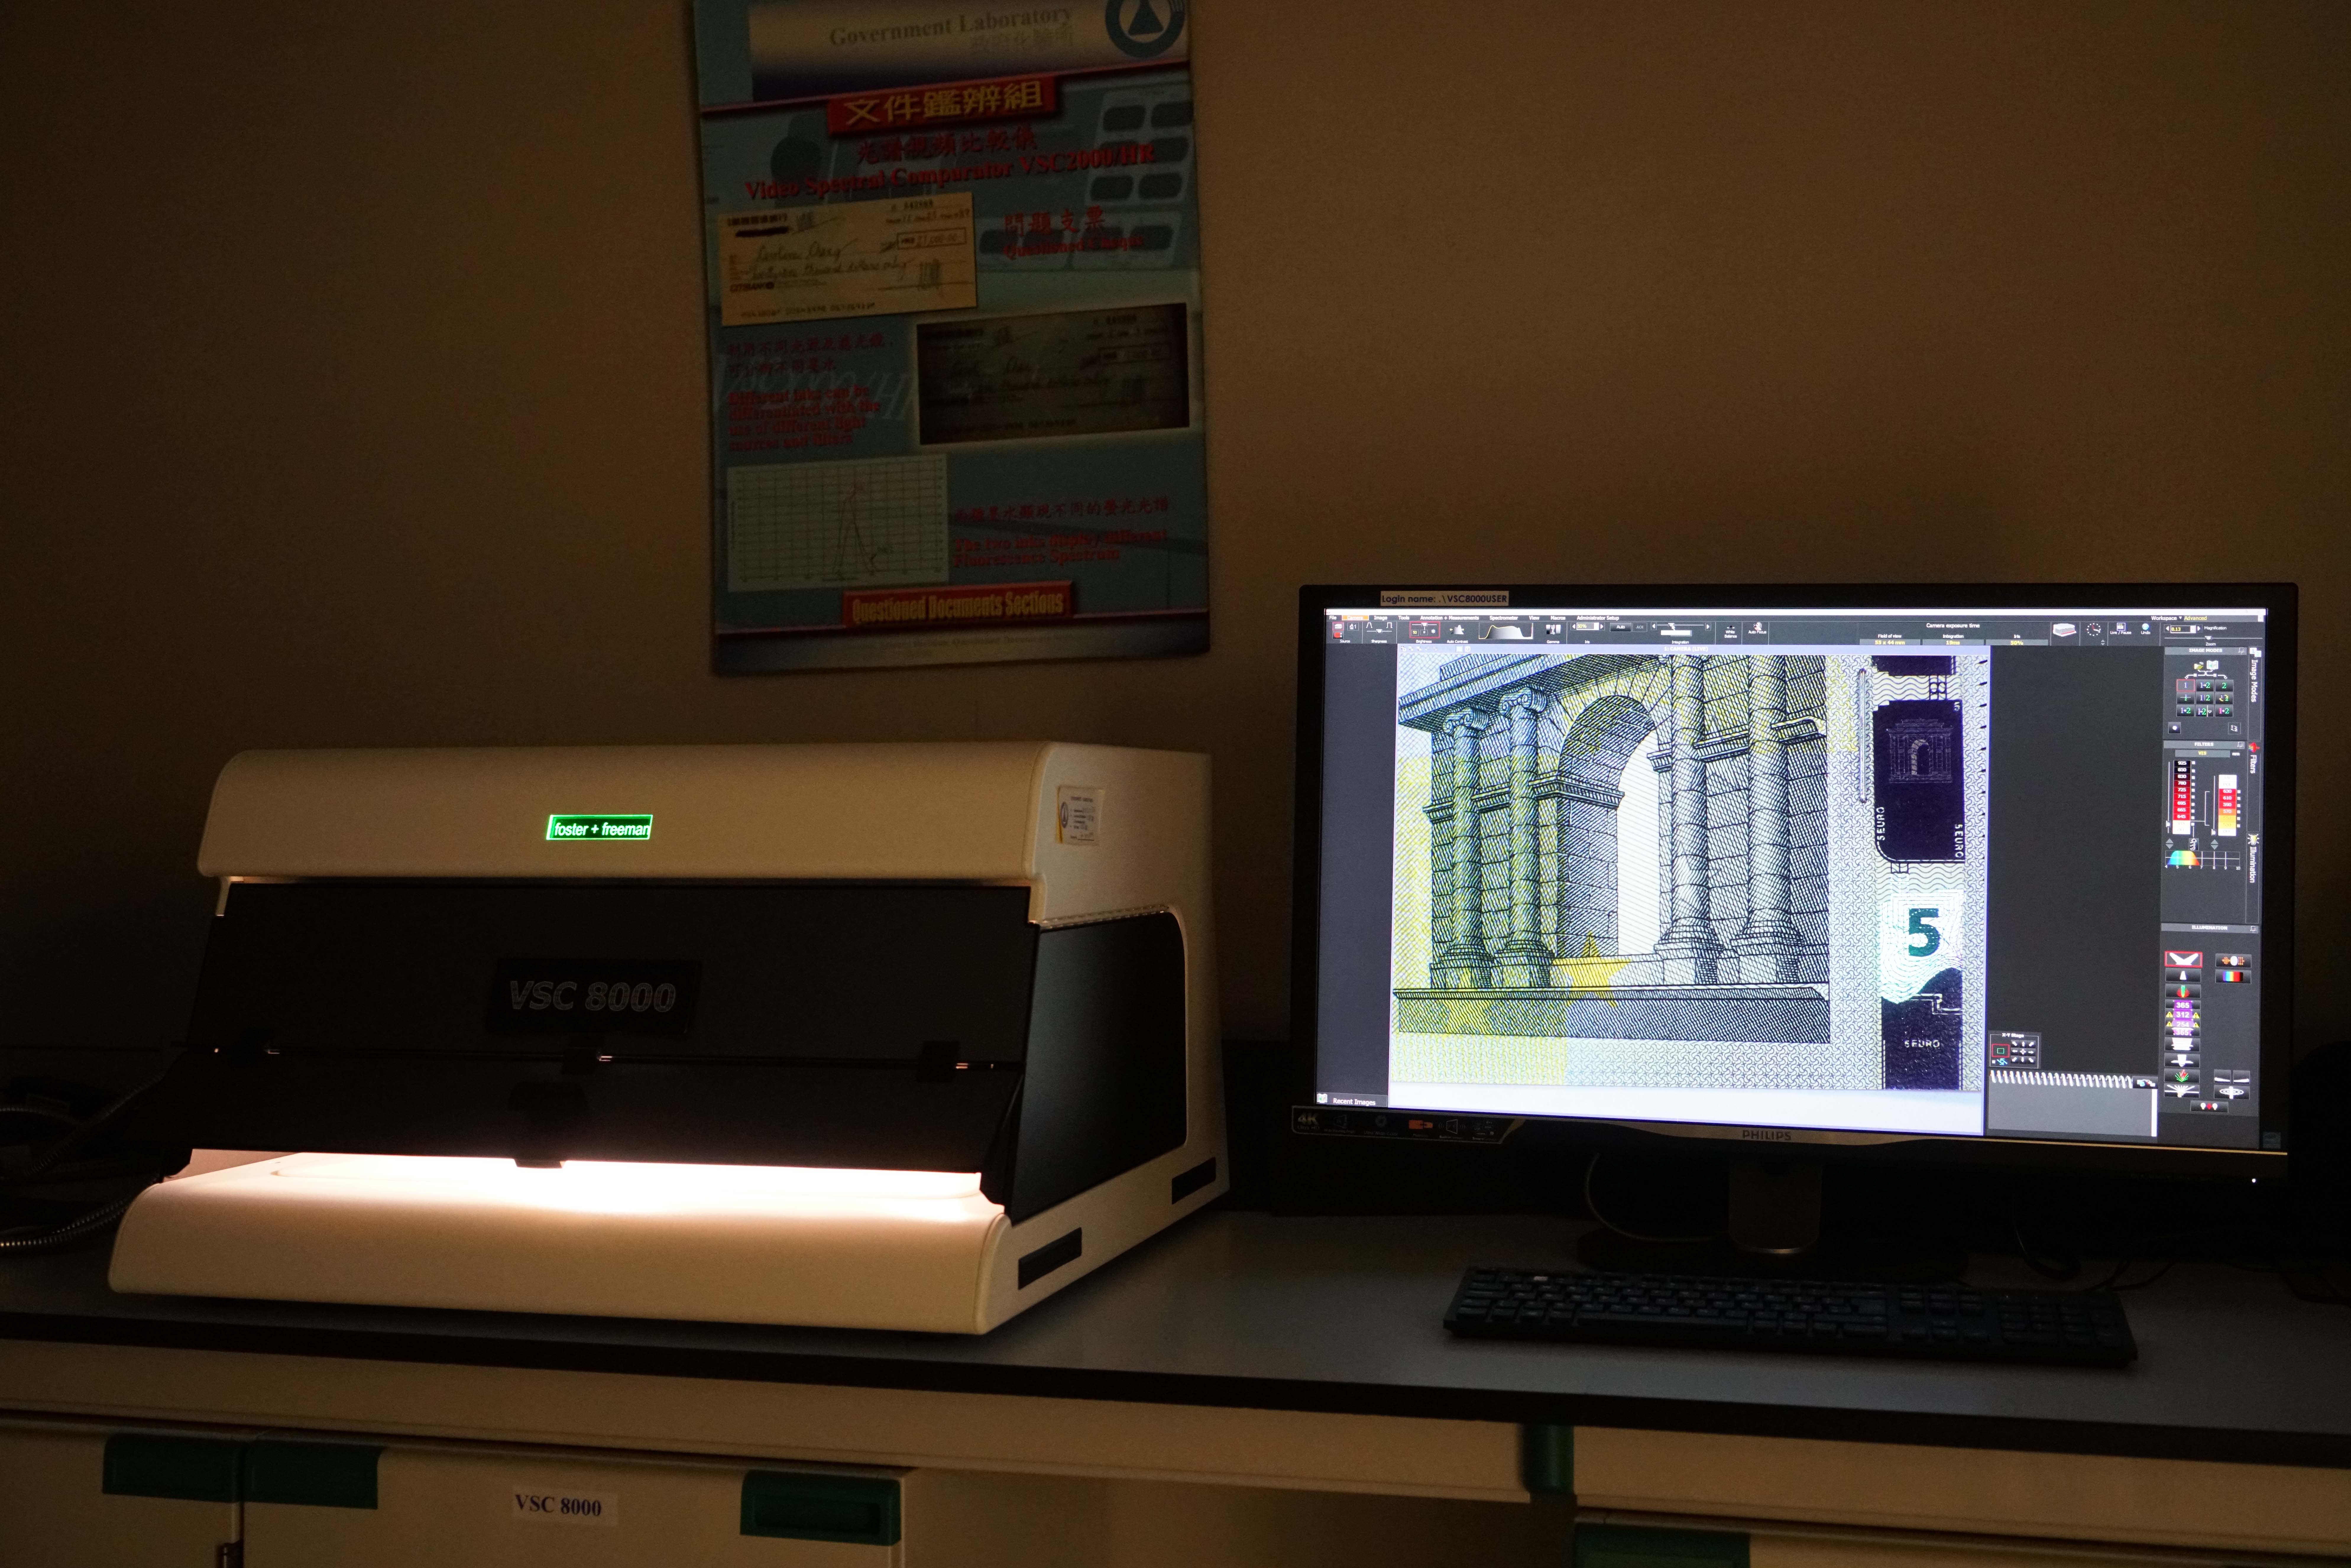 Video Spectral Comparator (VSC 8000)